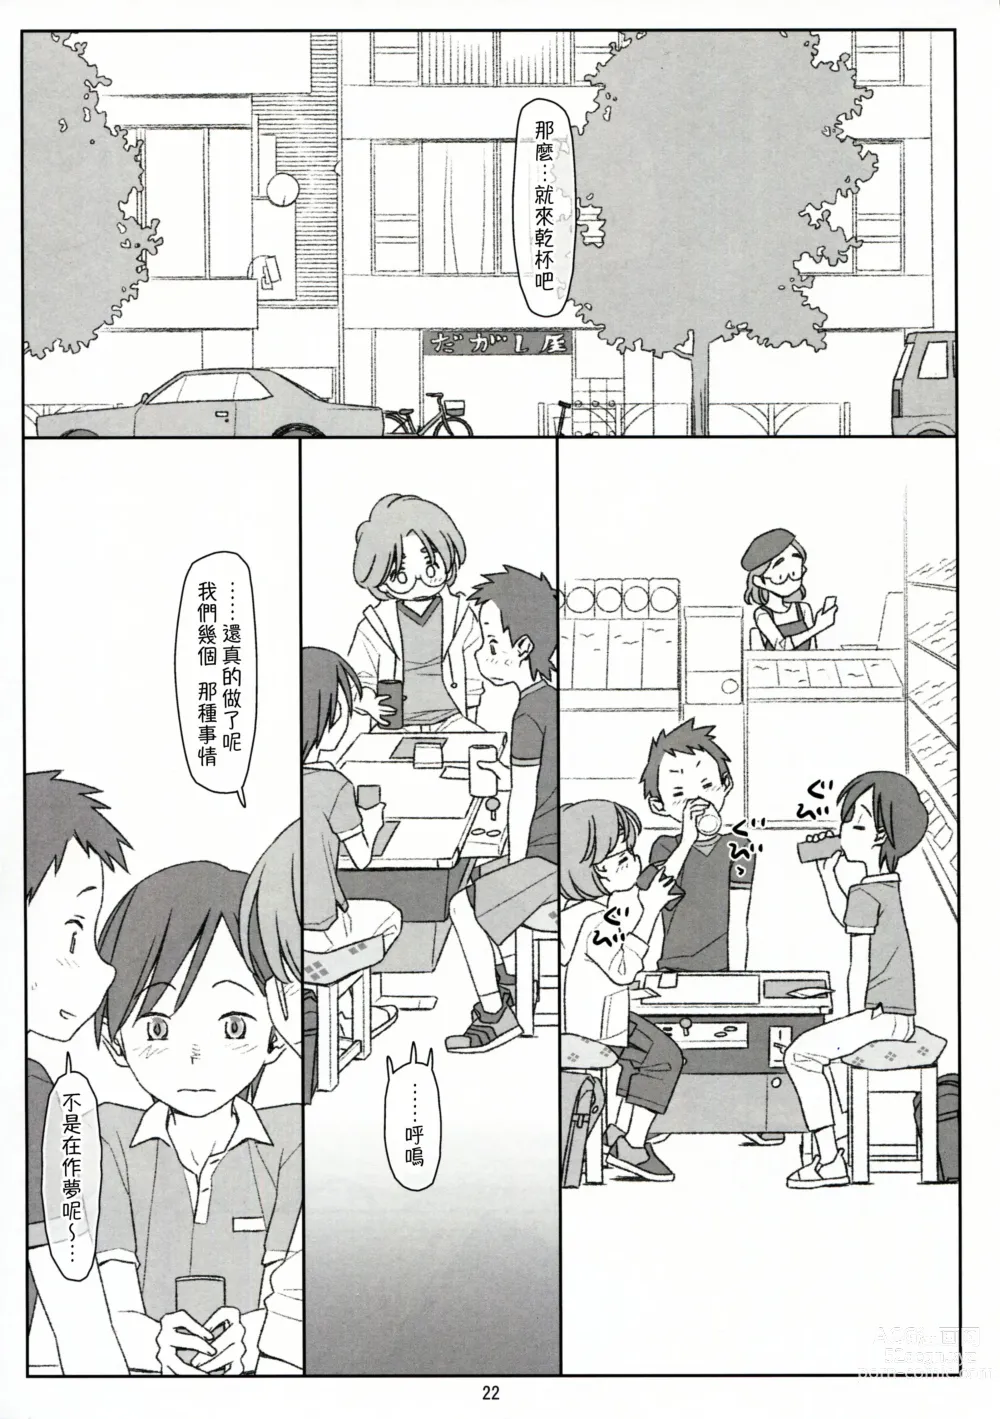 Page 48 of doujinshi Bokutachi no Super App + ②